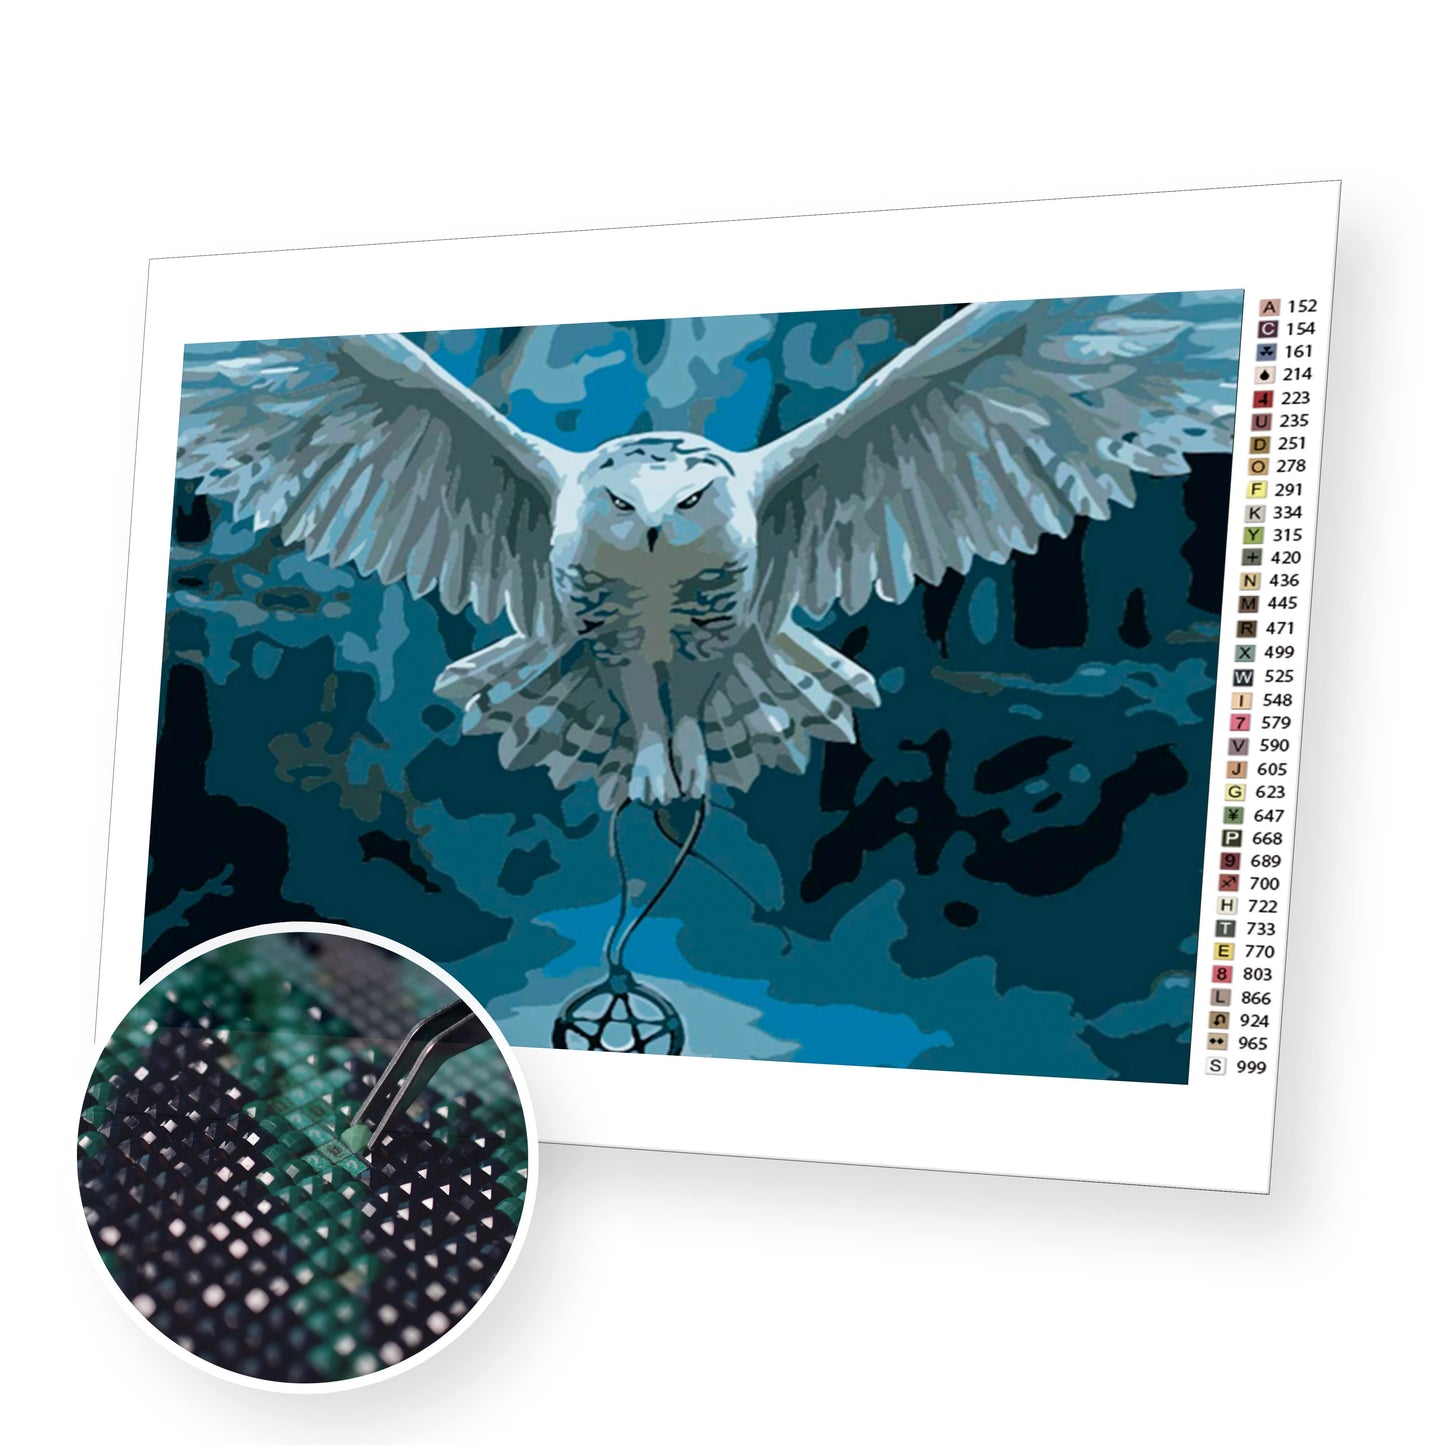 White Owl  - Diamond Painting Kit